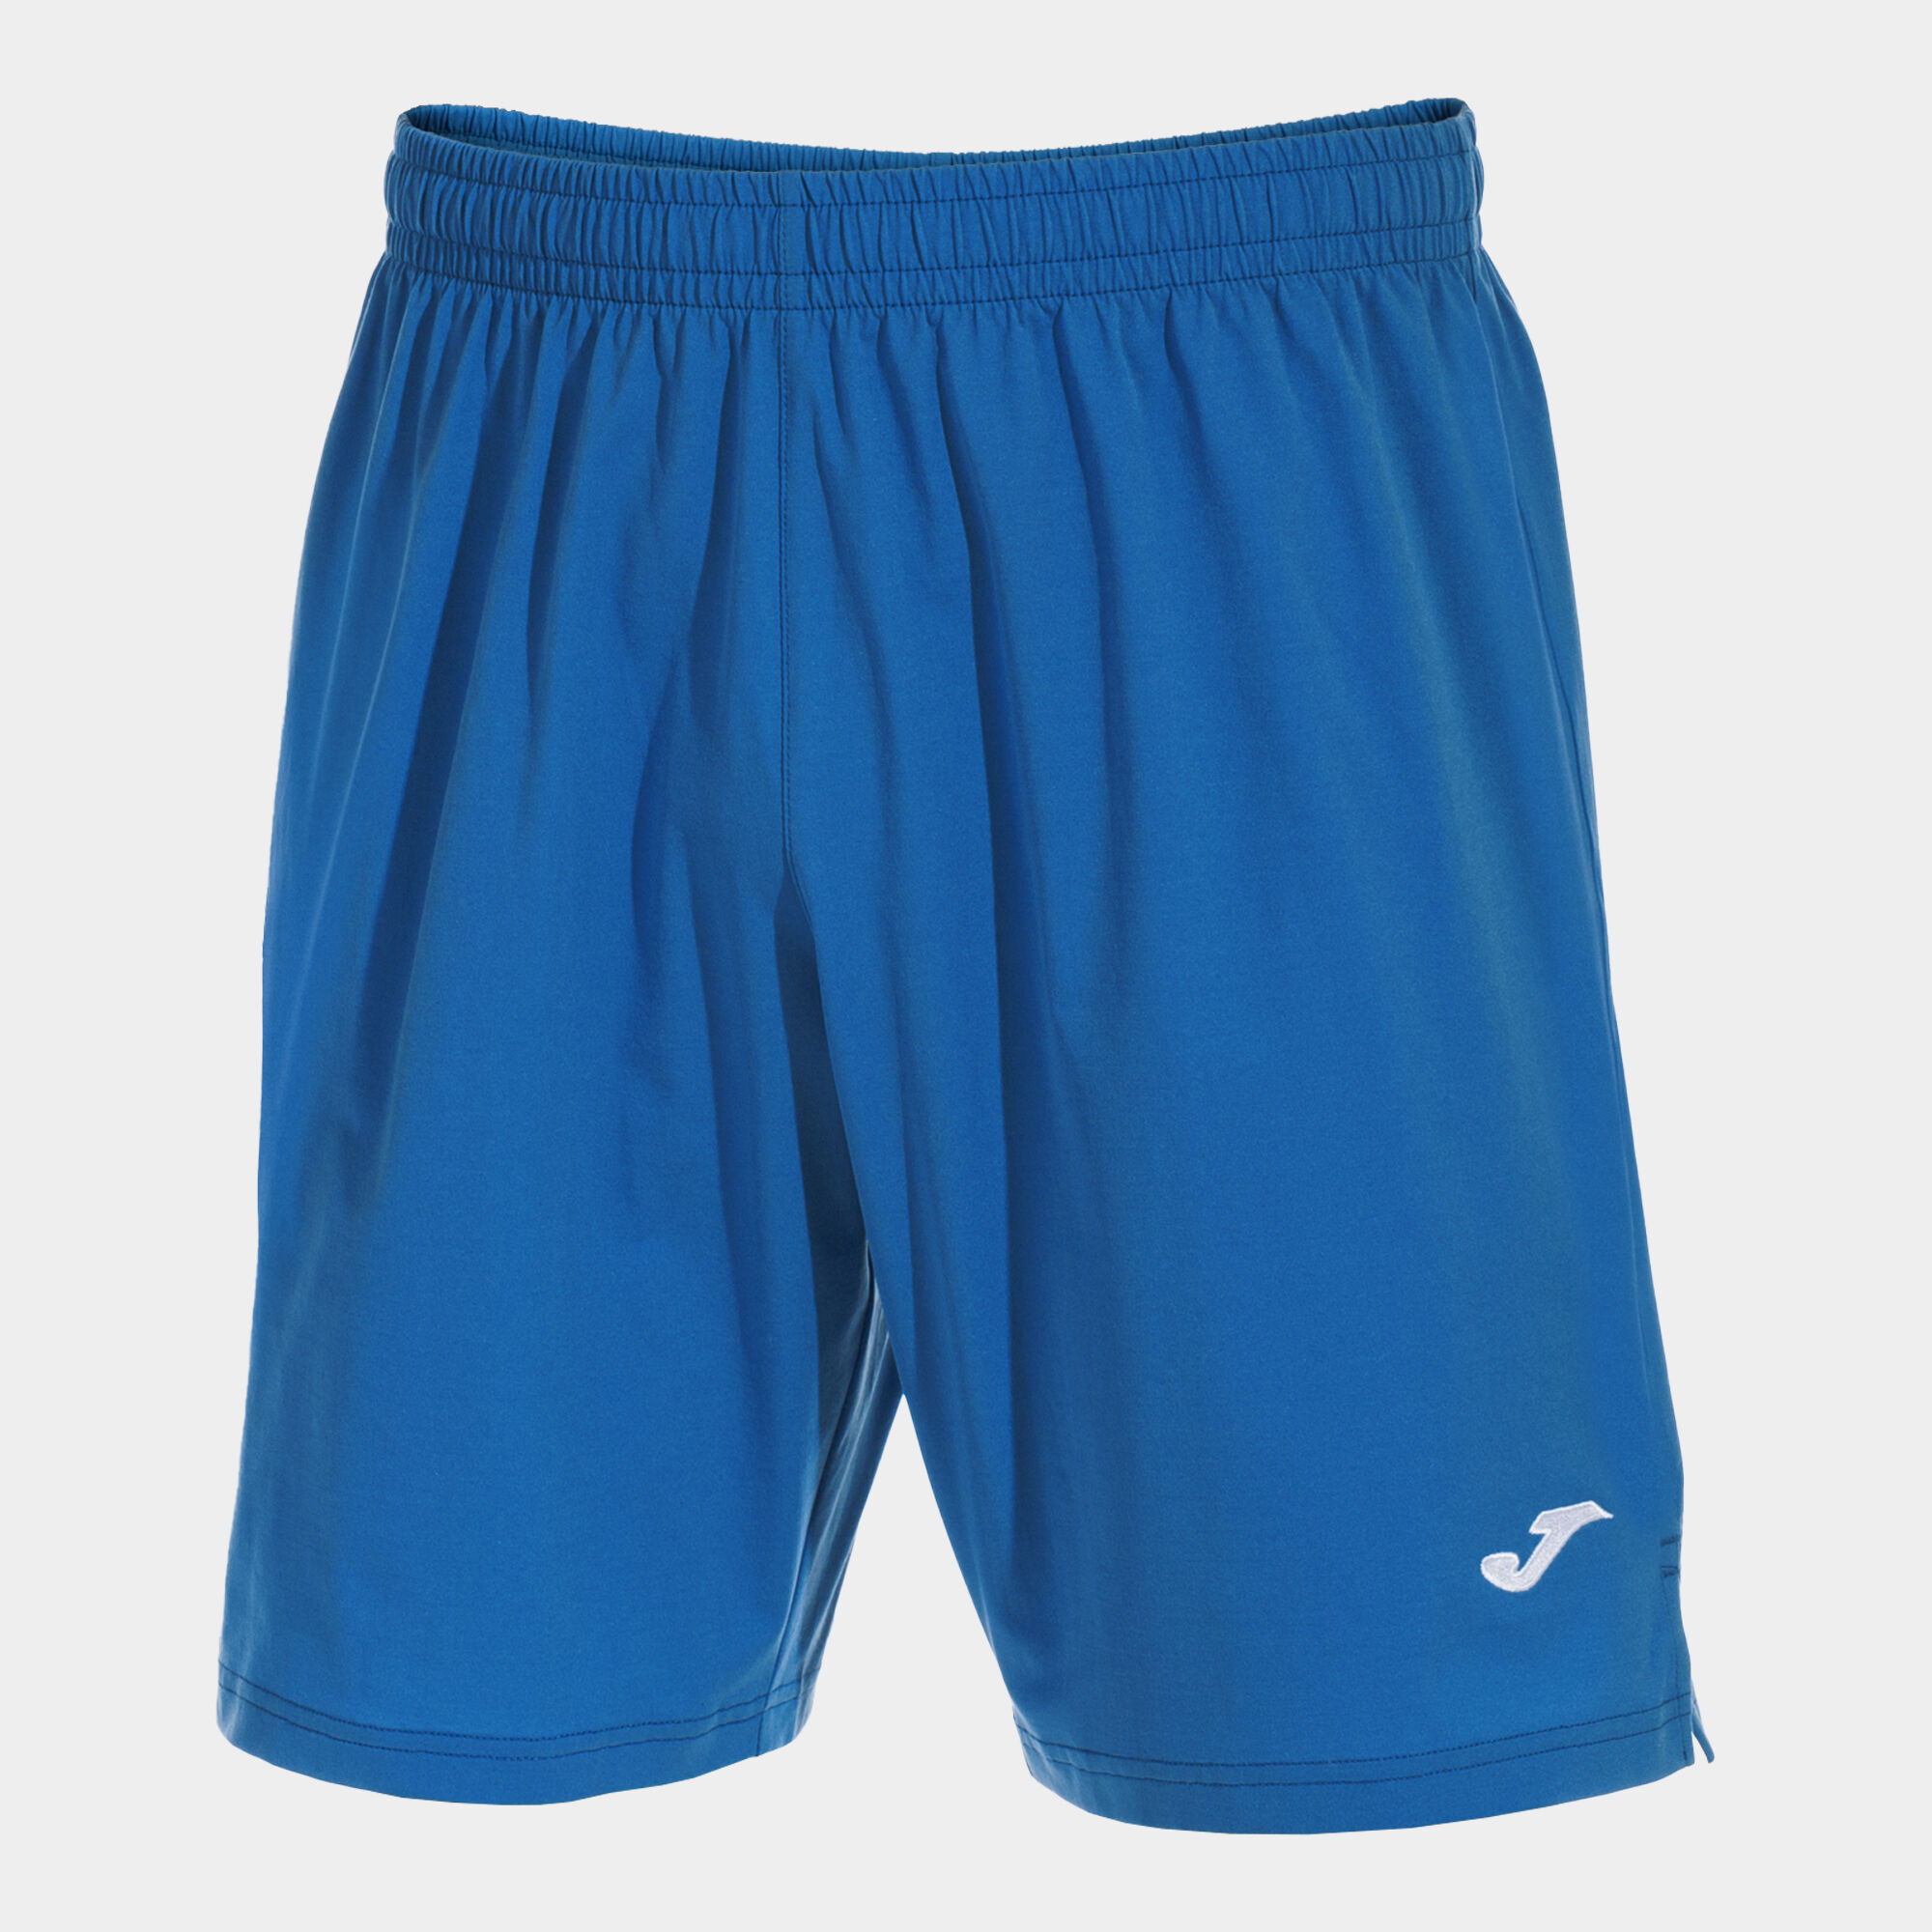 Shorts man Eurocopa III royal blue